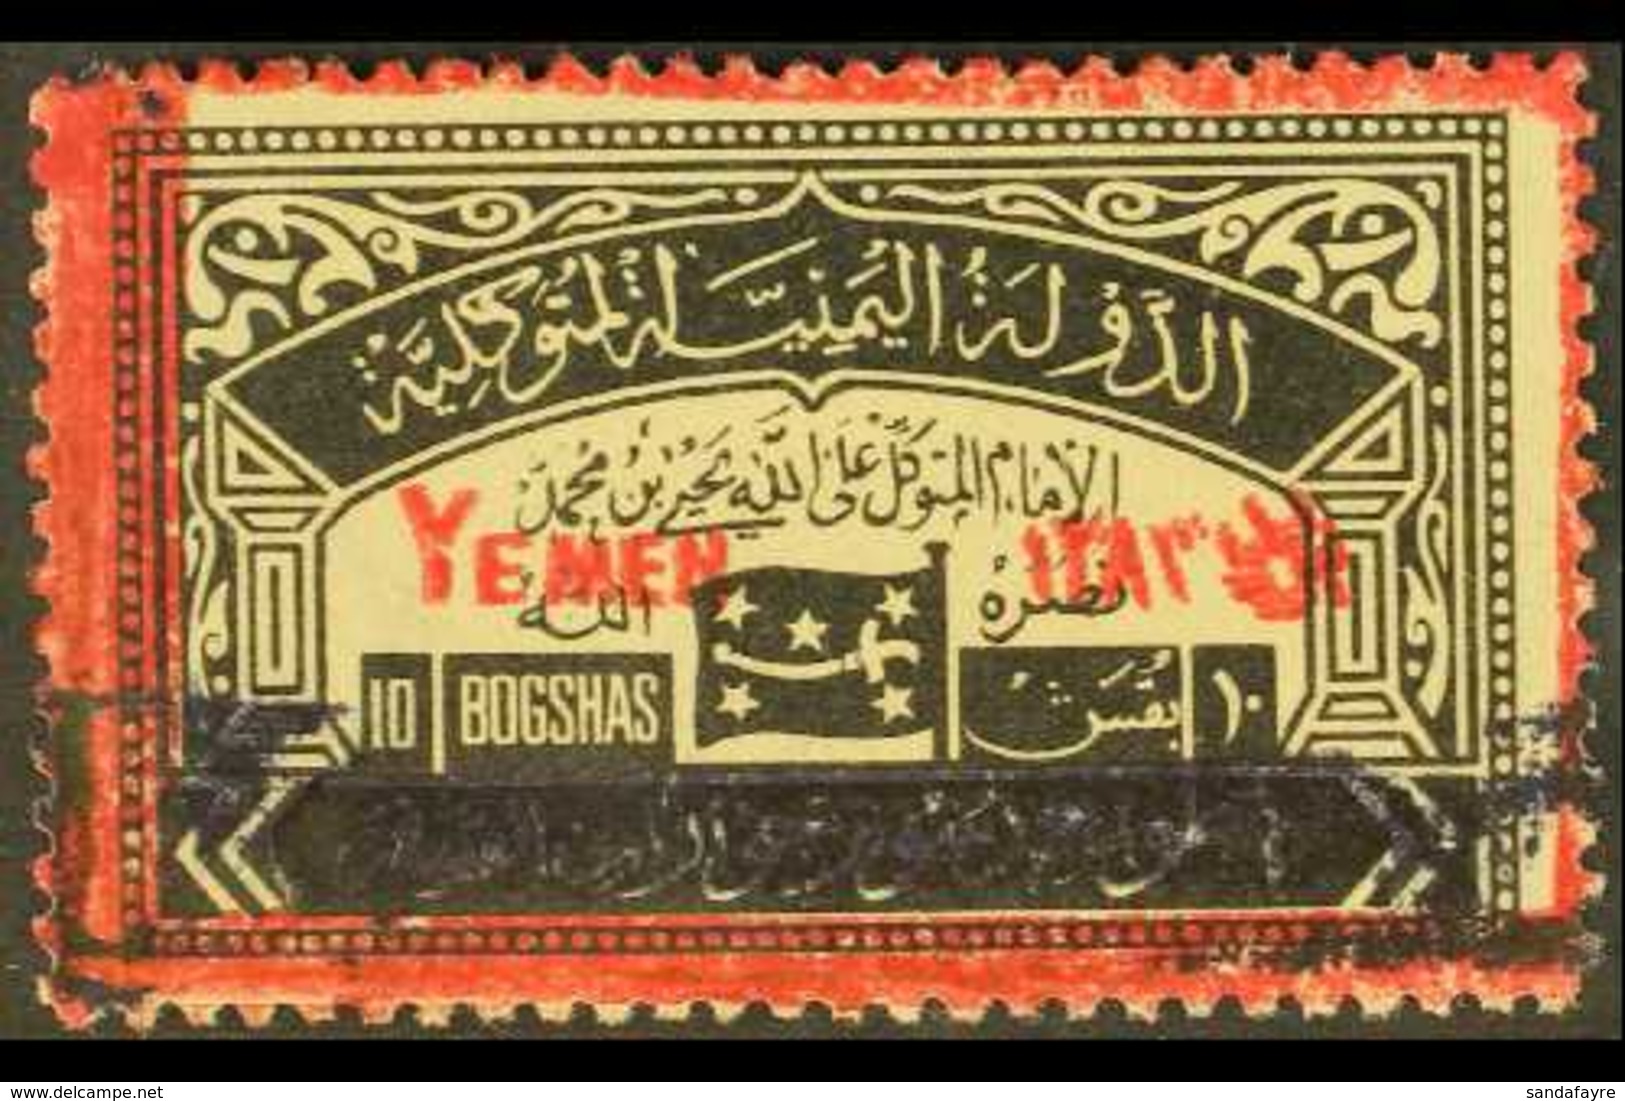 ROYALIST CIVIL WAR ISSUES  1963 10b Black And Carmine, Consular Stamp Overprinted "Yemen" And "Postage 1383" In Orange R - Yemen